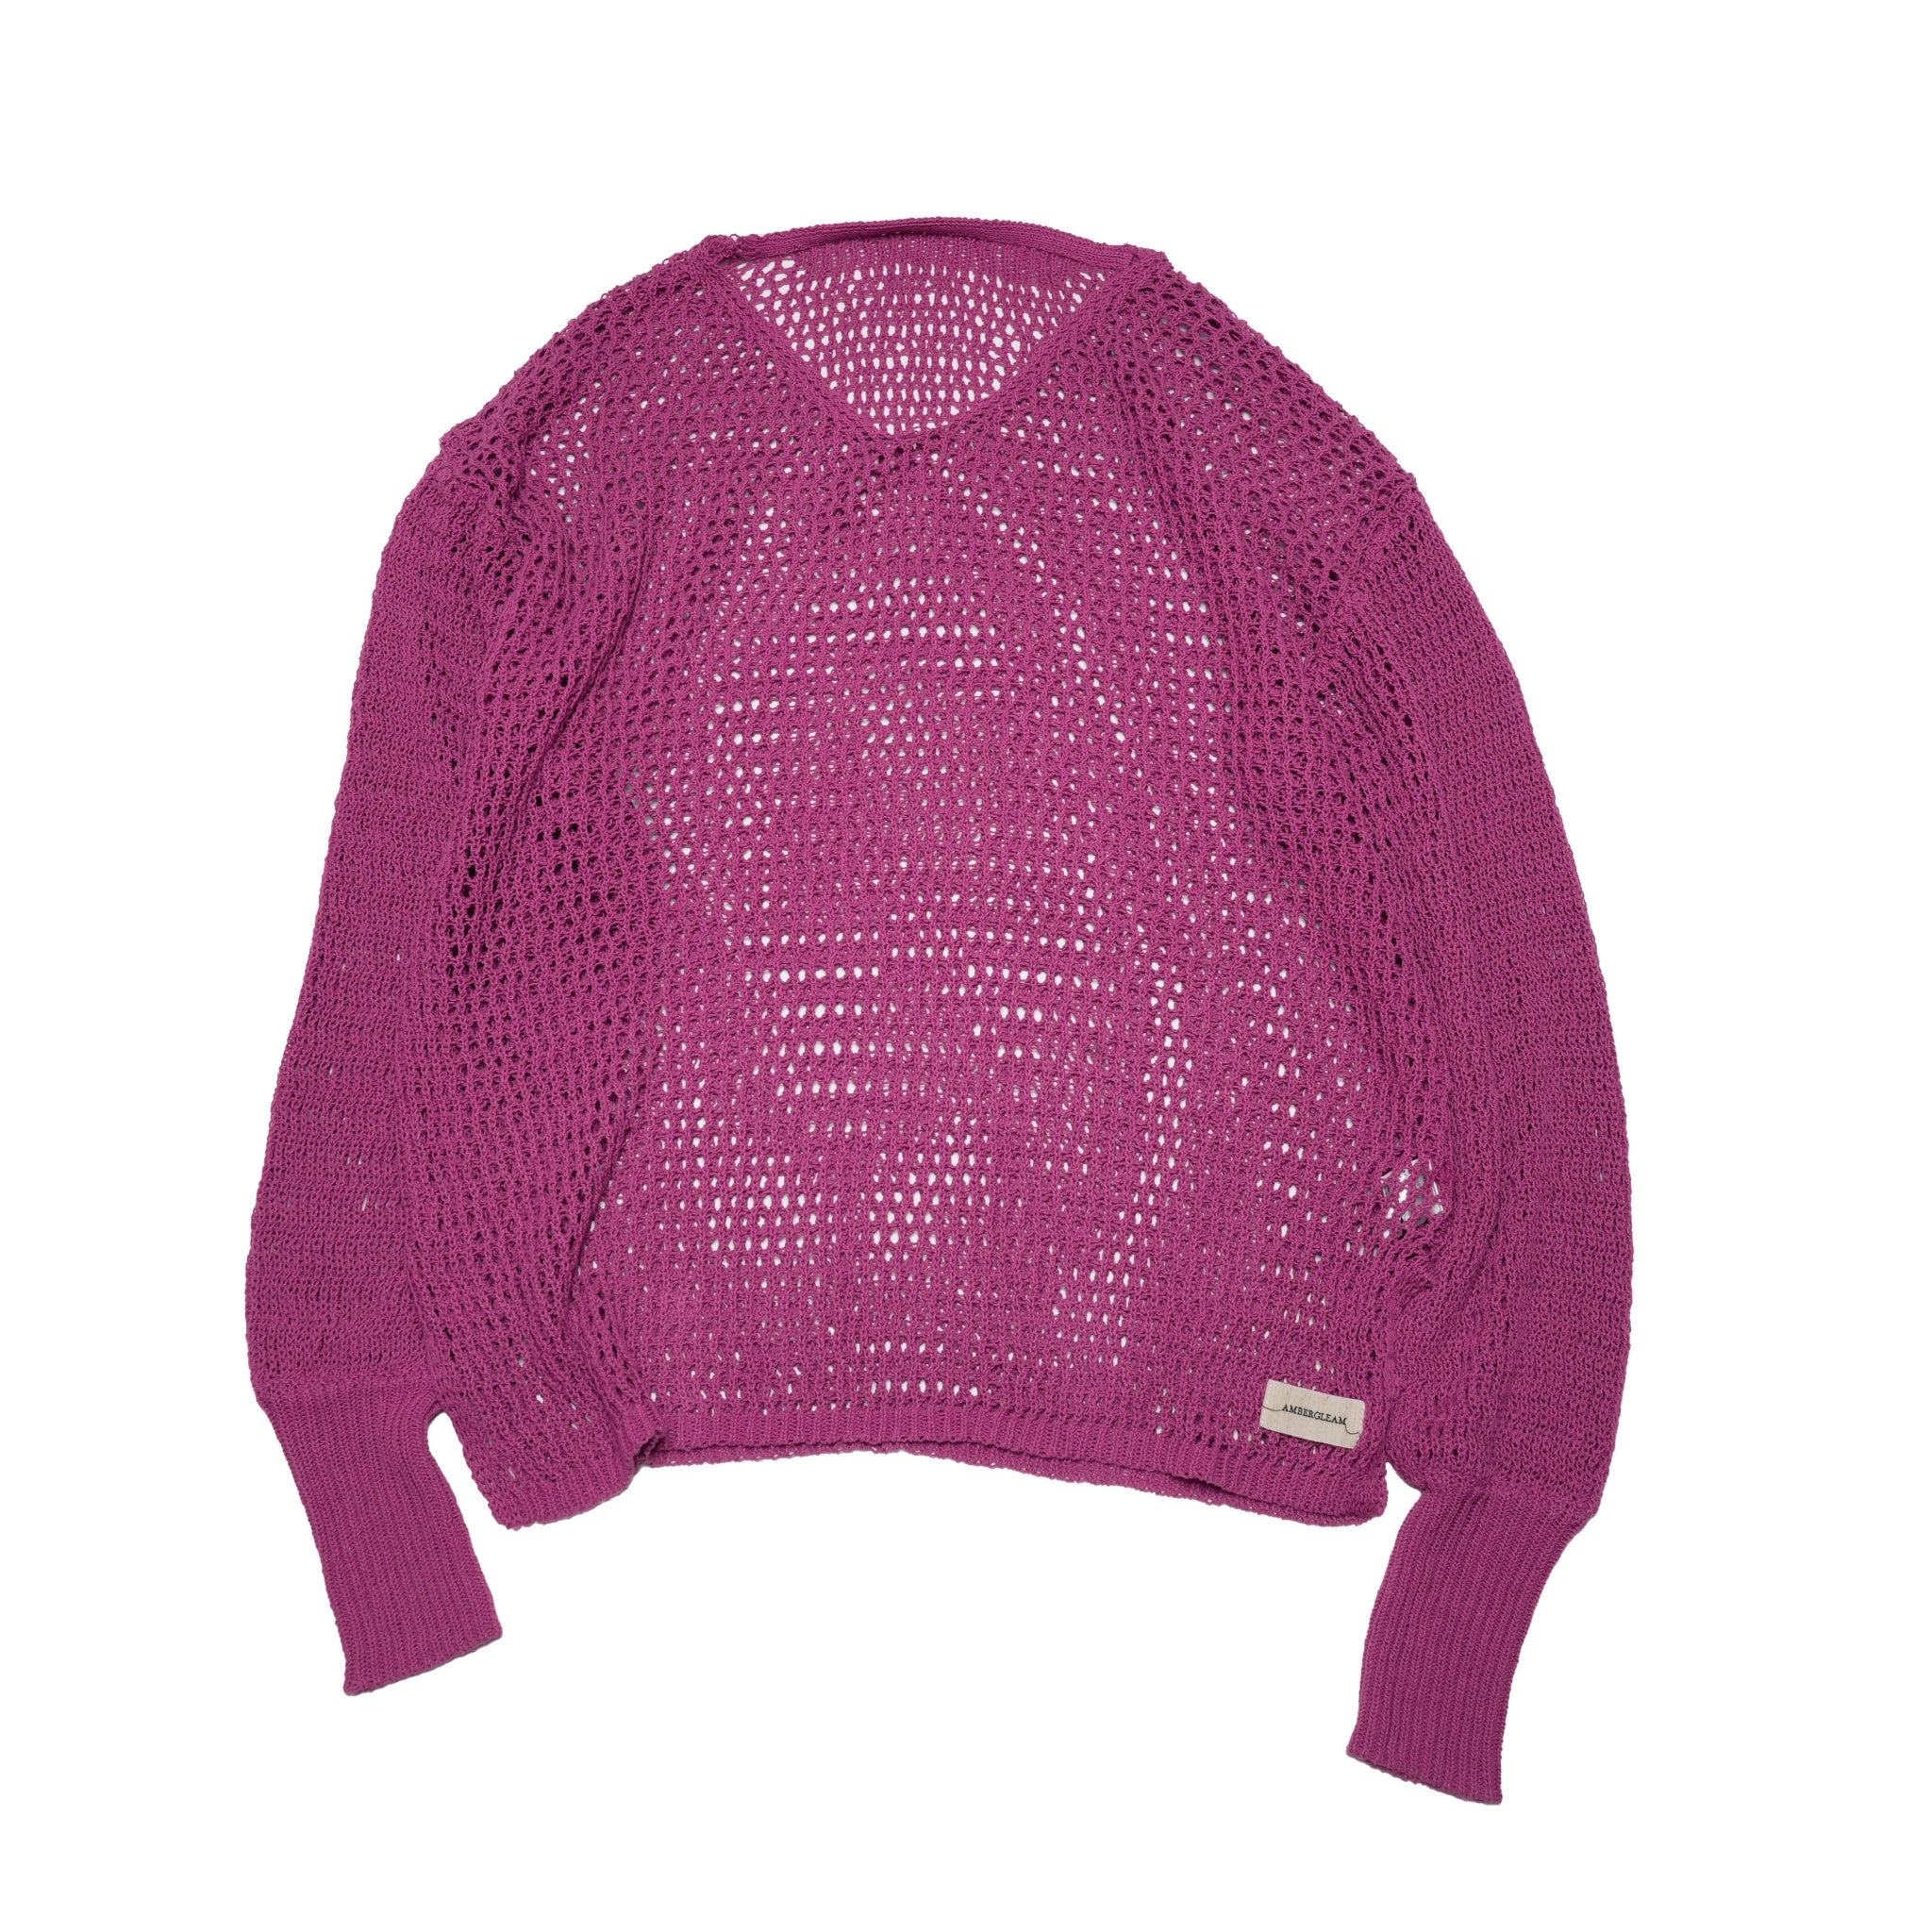 Name:Mesh Knit Cotton V Neck | Color:Raspberry/Black【AMBERGLEAM_アンバーグリーム】| No:1186141413